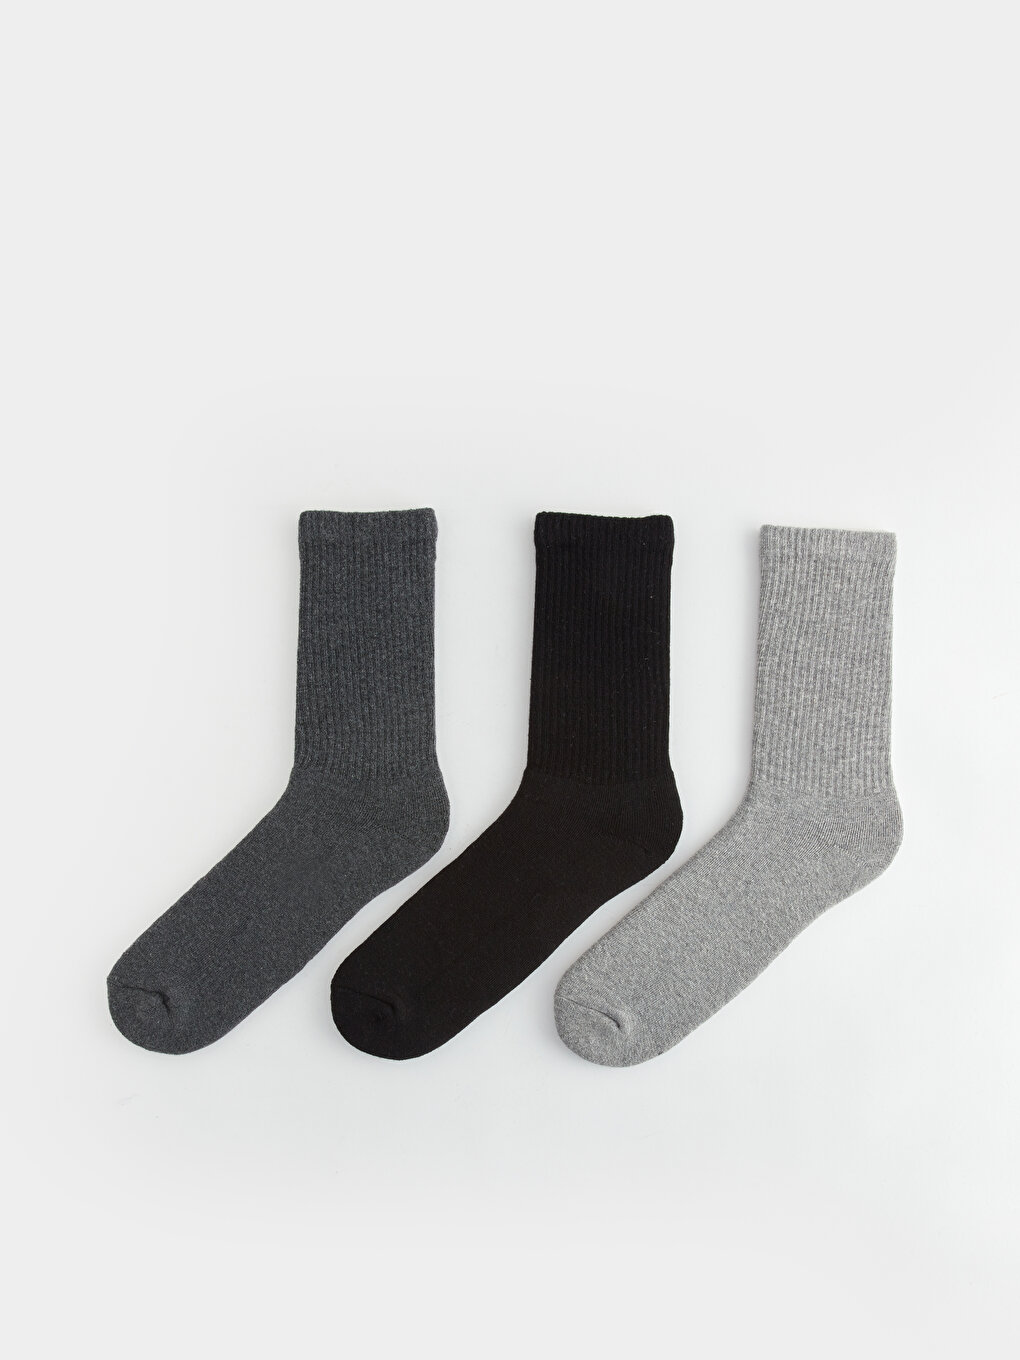 Мужские носки, 3 предмета LCW ACCESSORIES, антрацит полосатые мужские носки 3 шт в упаковке lcw accessories